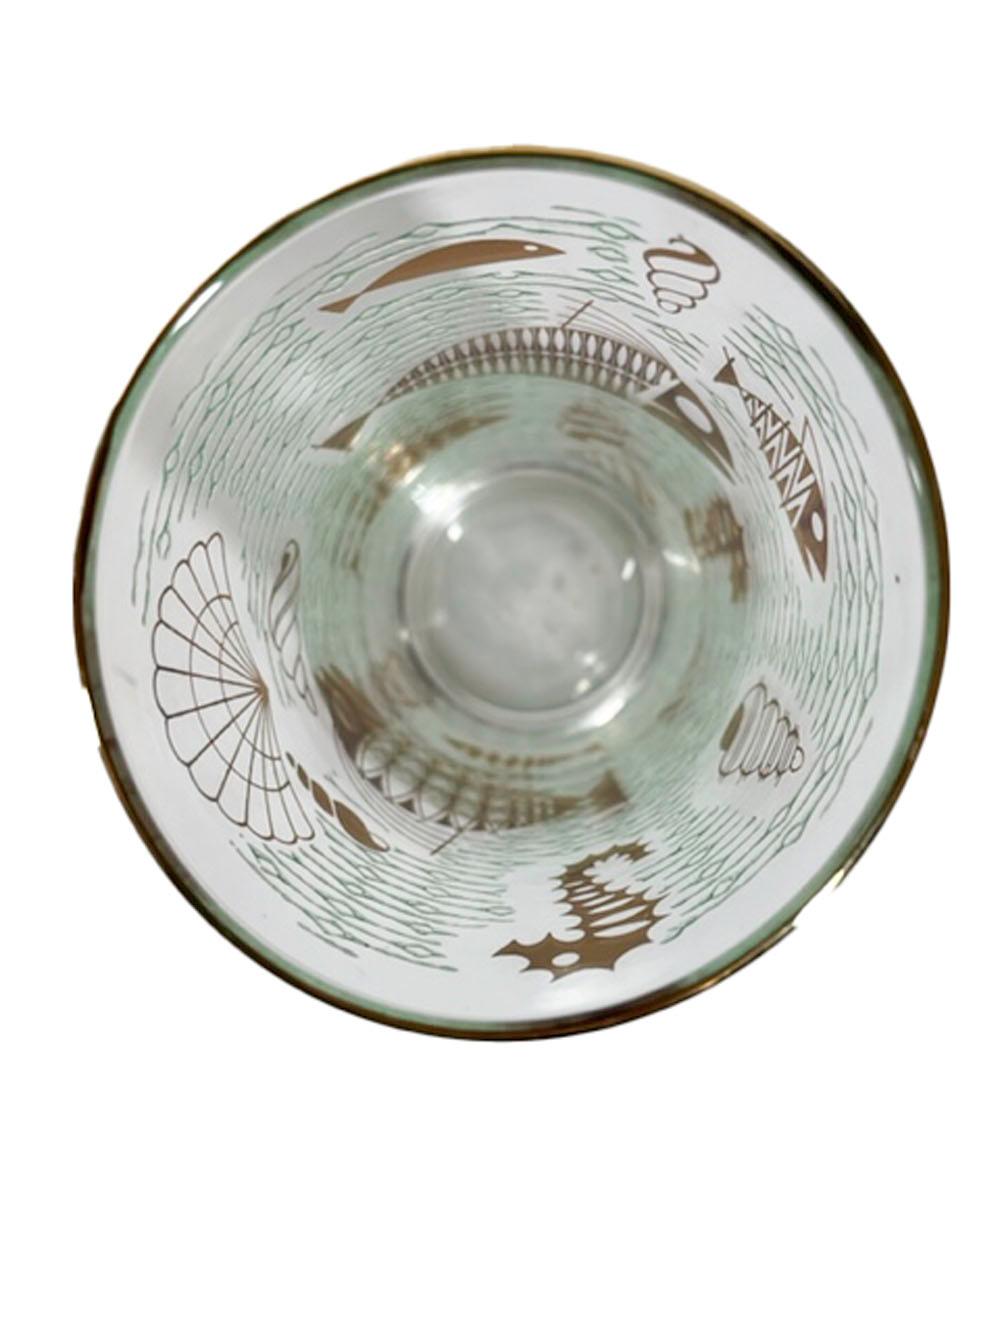 libbey vintage glassware patterns